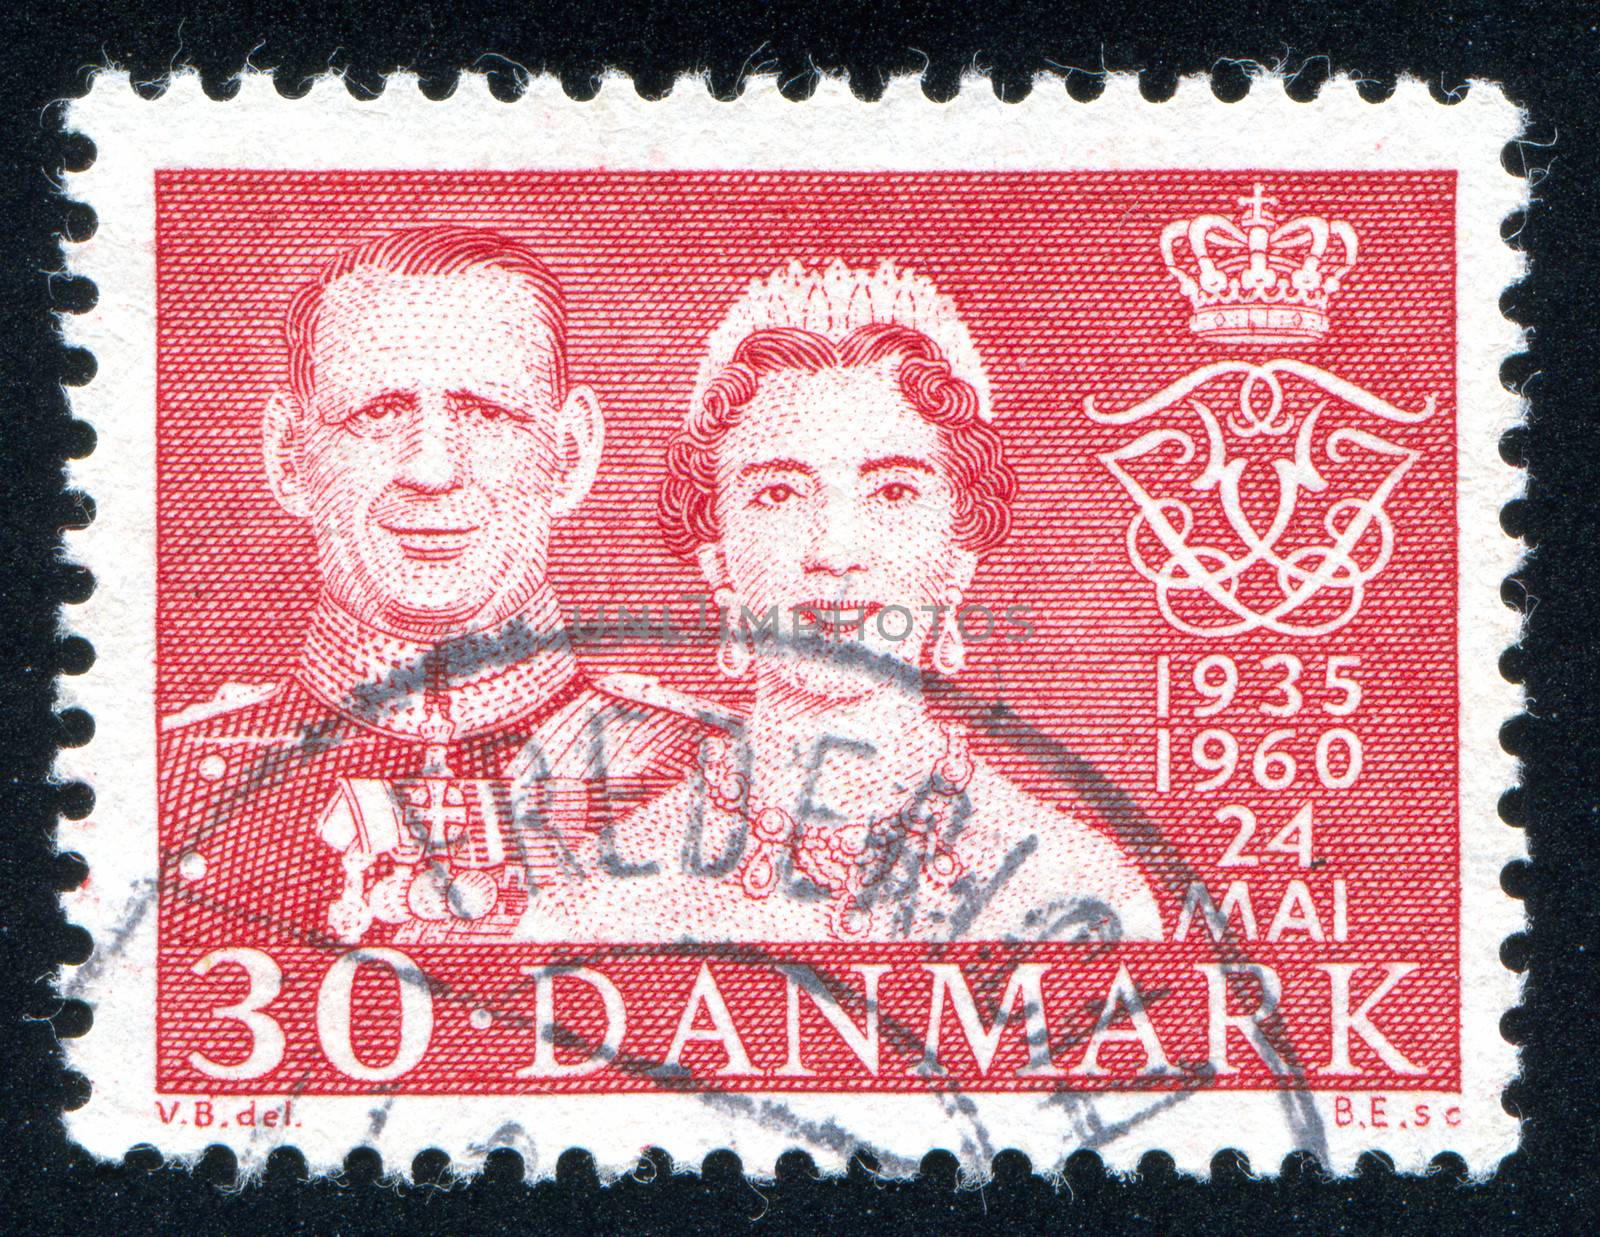 DENMARK - CIRCA 1960: stamp printed by Denmark, shows King Frederik IX and Queen Ingrid, circa 1960